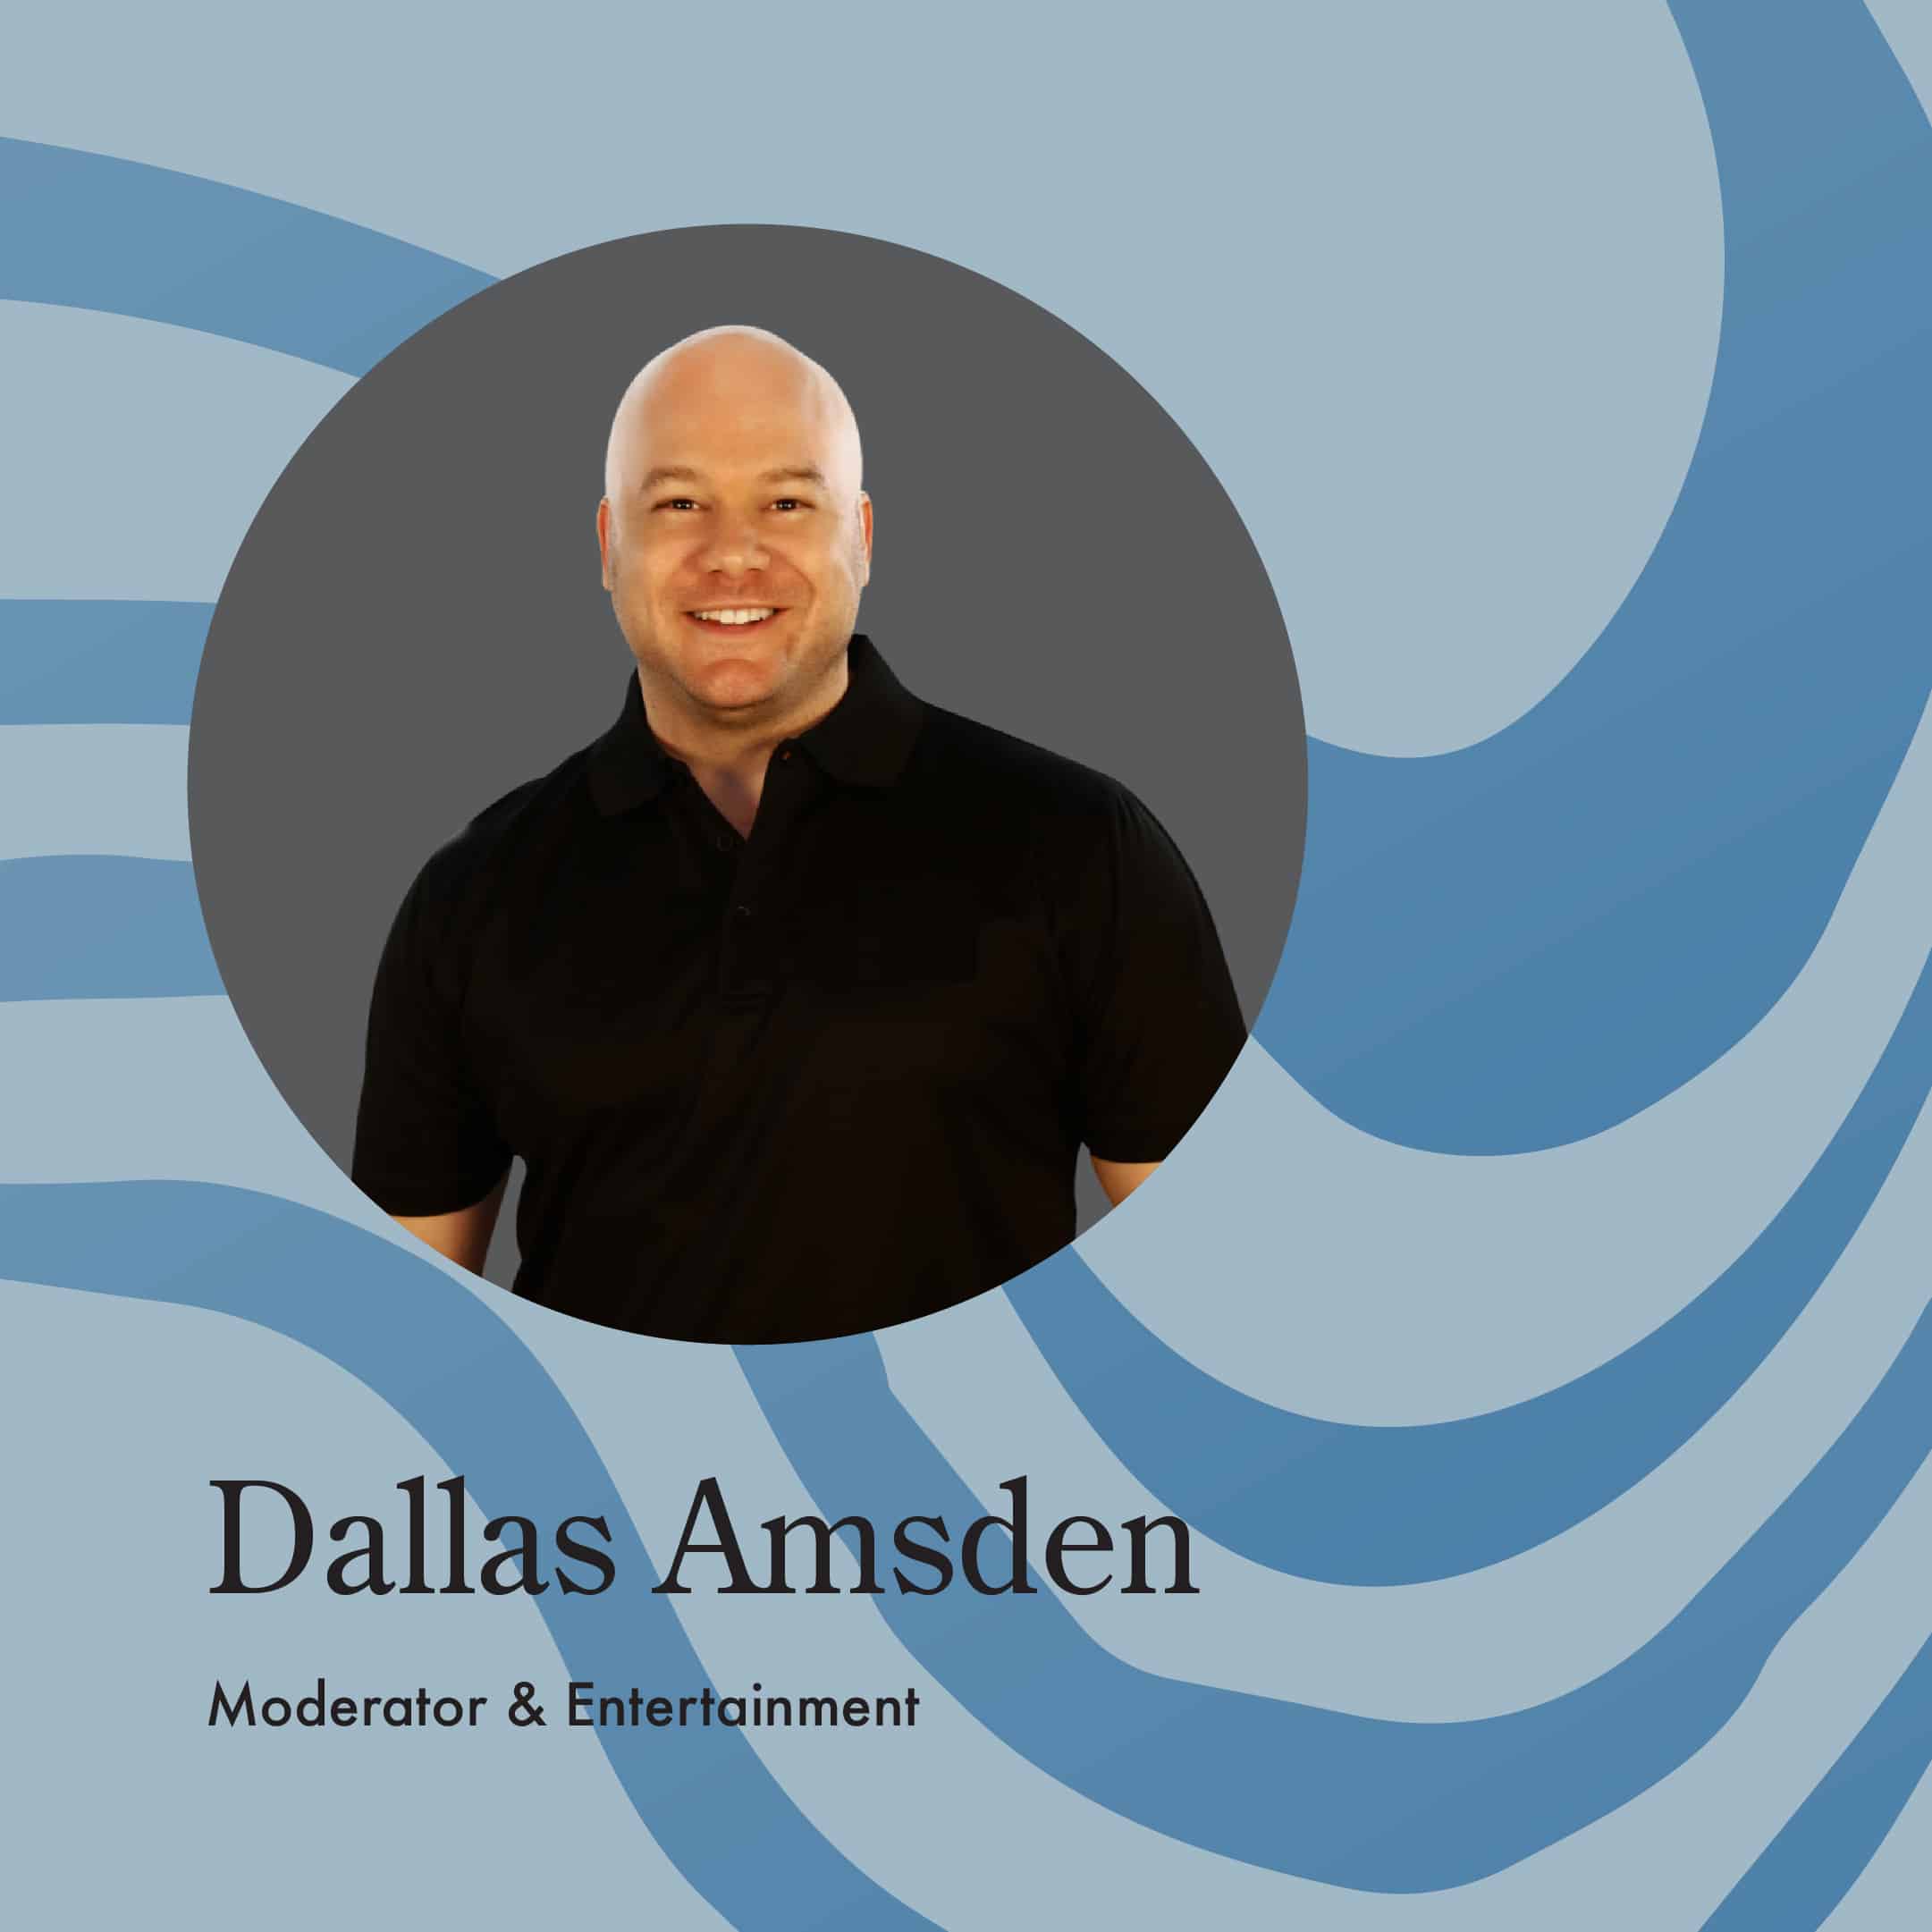 Conference moderator and speaker: Dallas Amsden